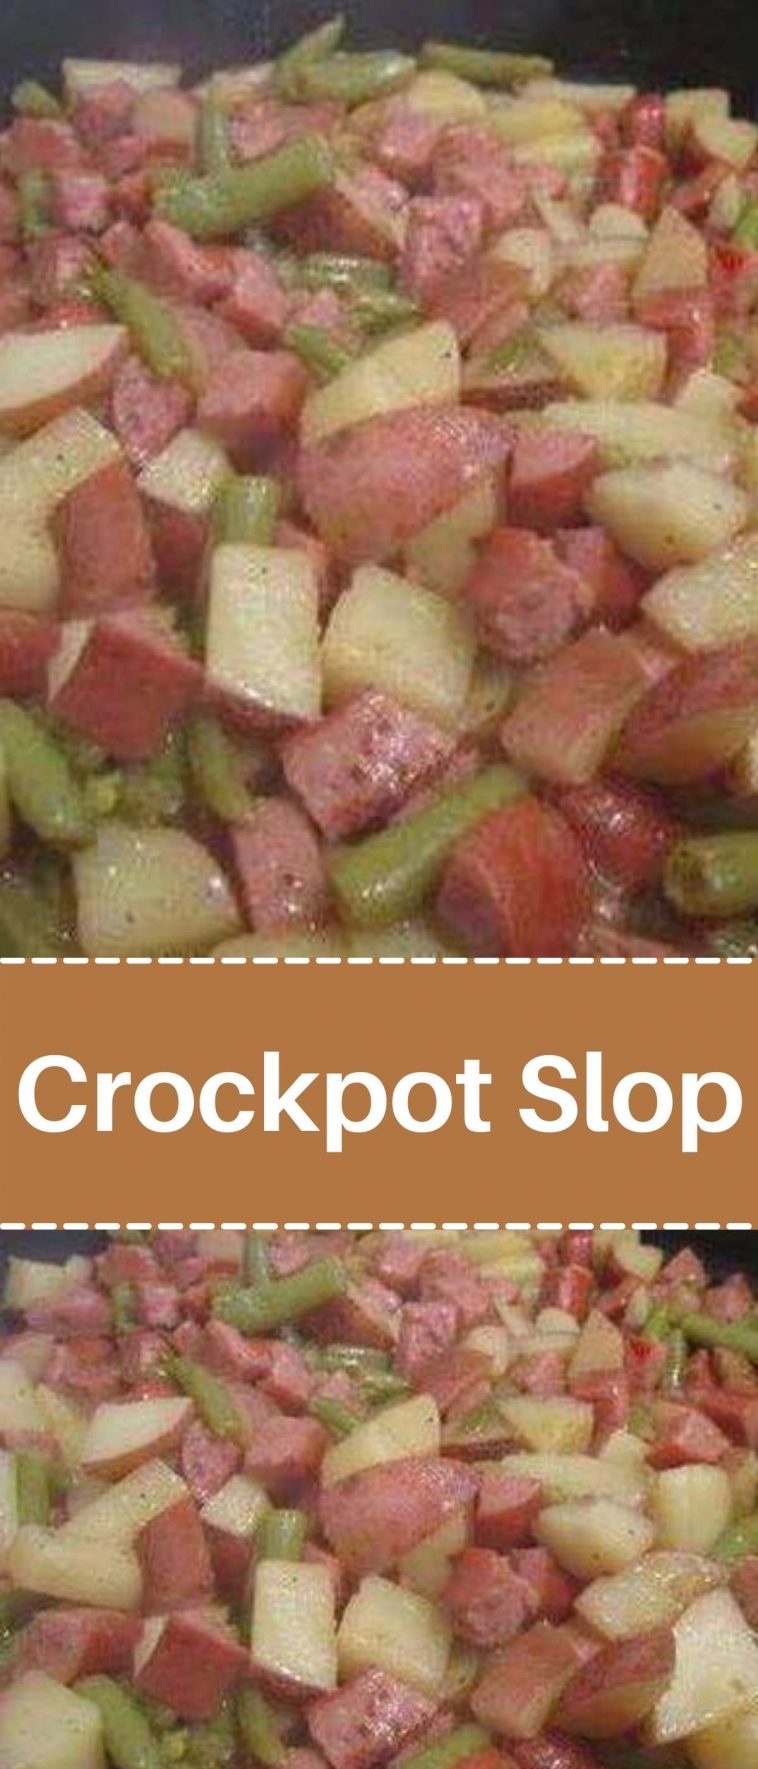 Crockpot Slop